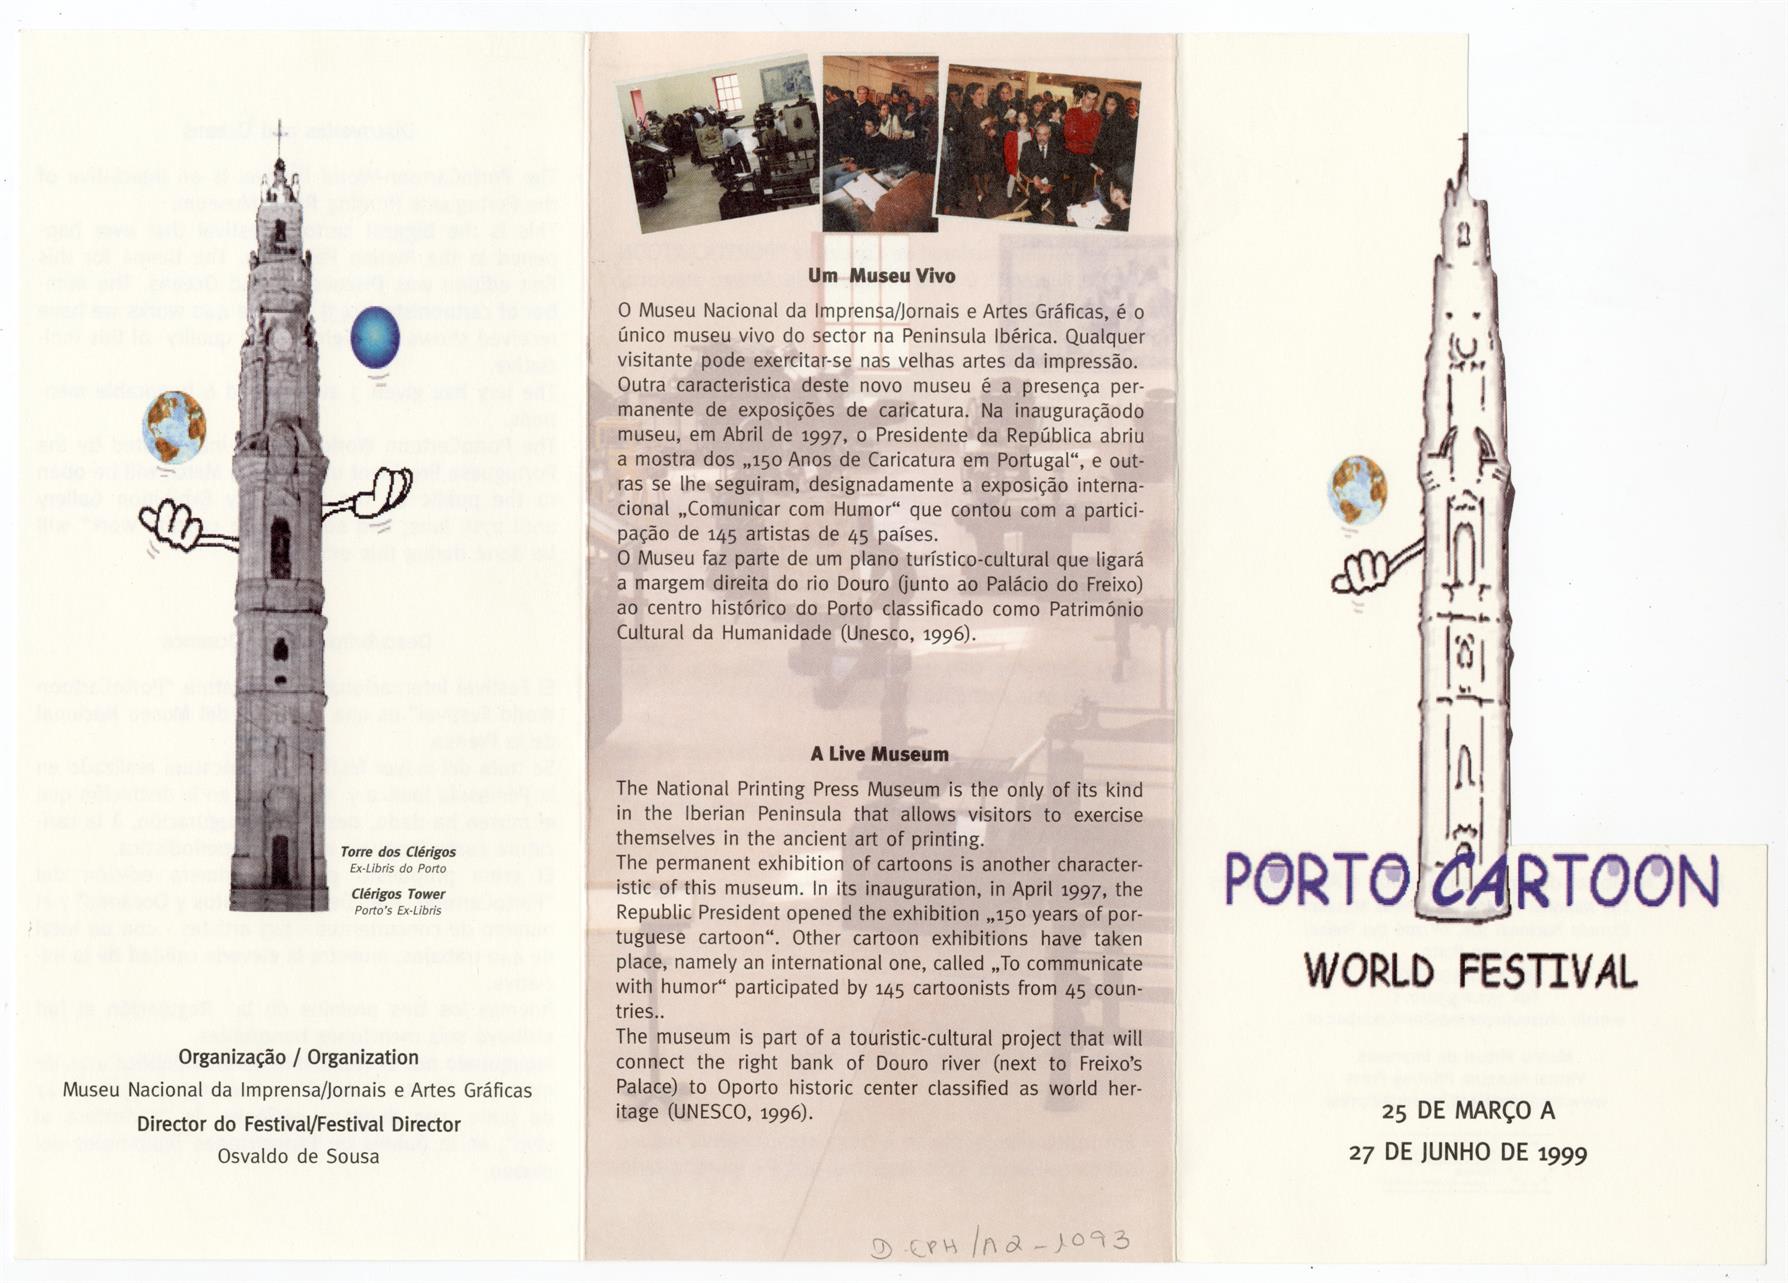 Porto Cartoon World Festival